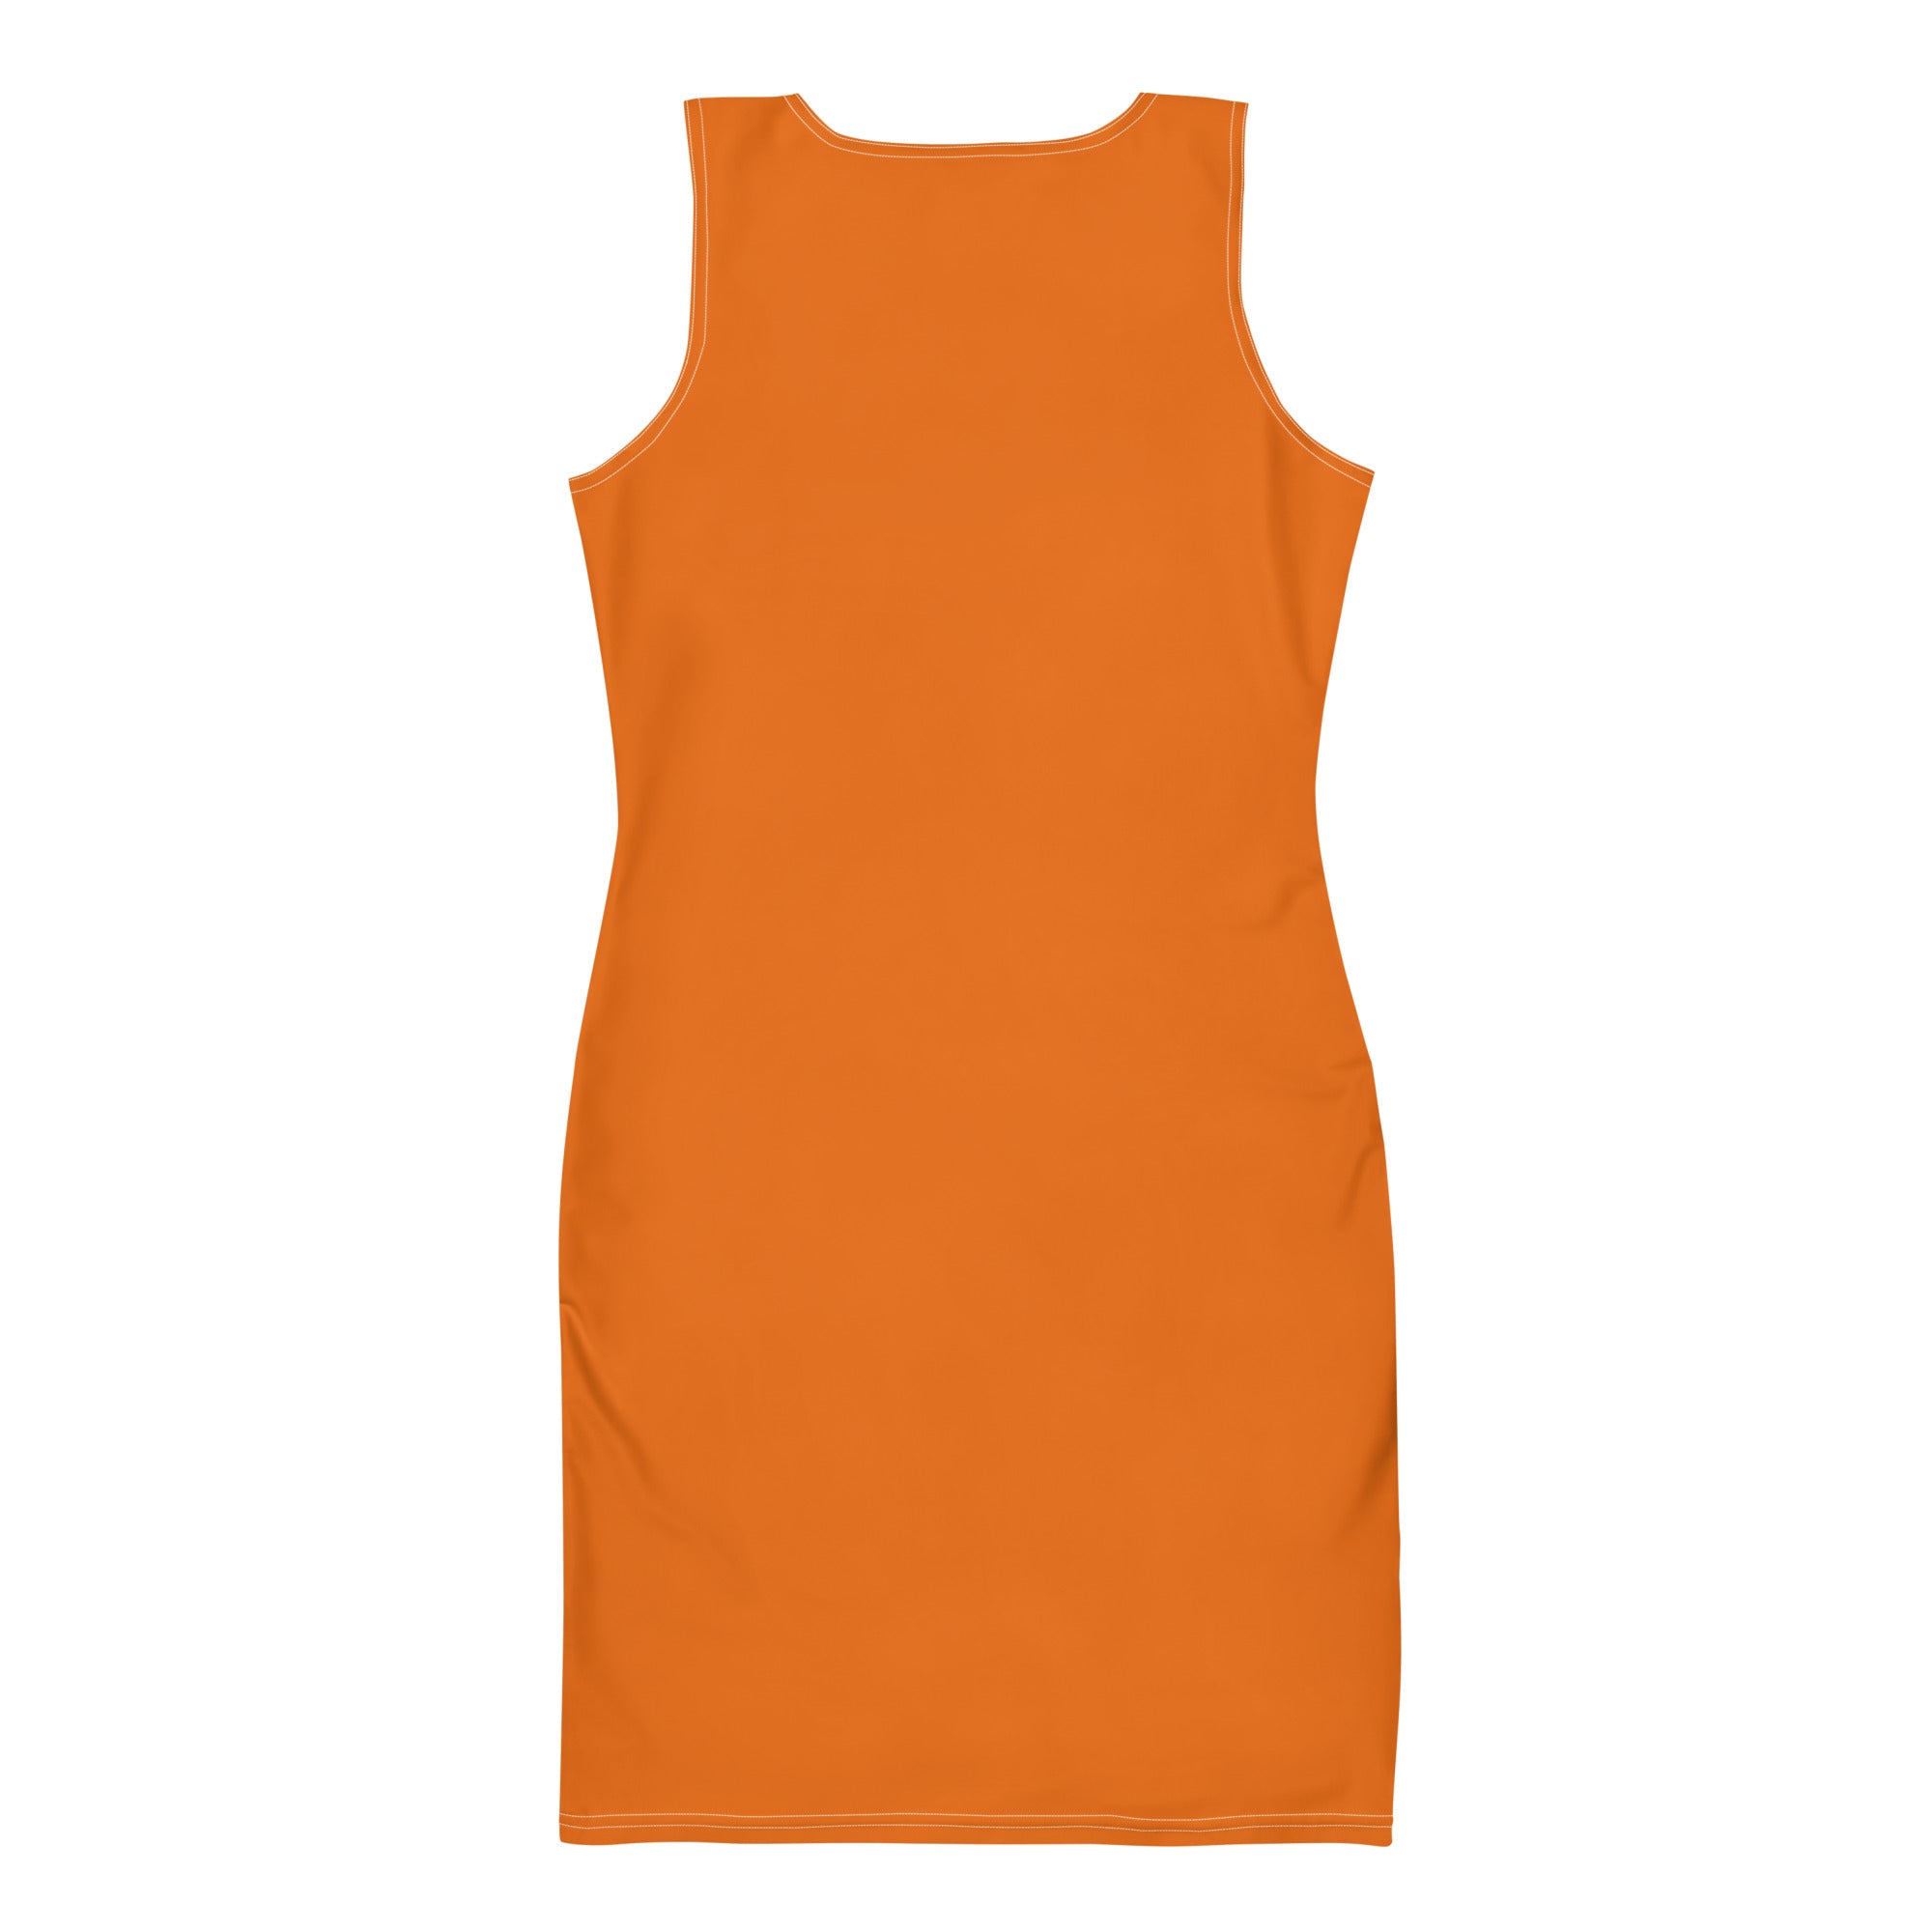 Orange CYC LYR Bodycon dress